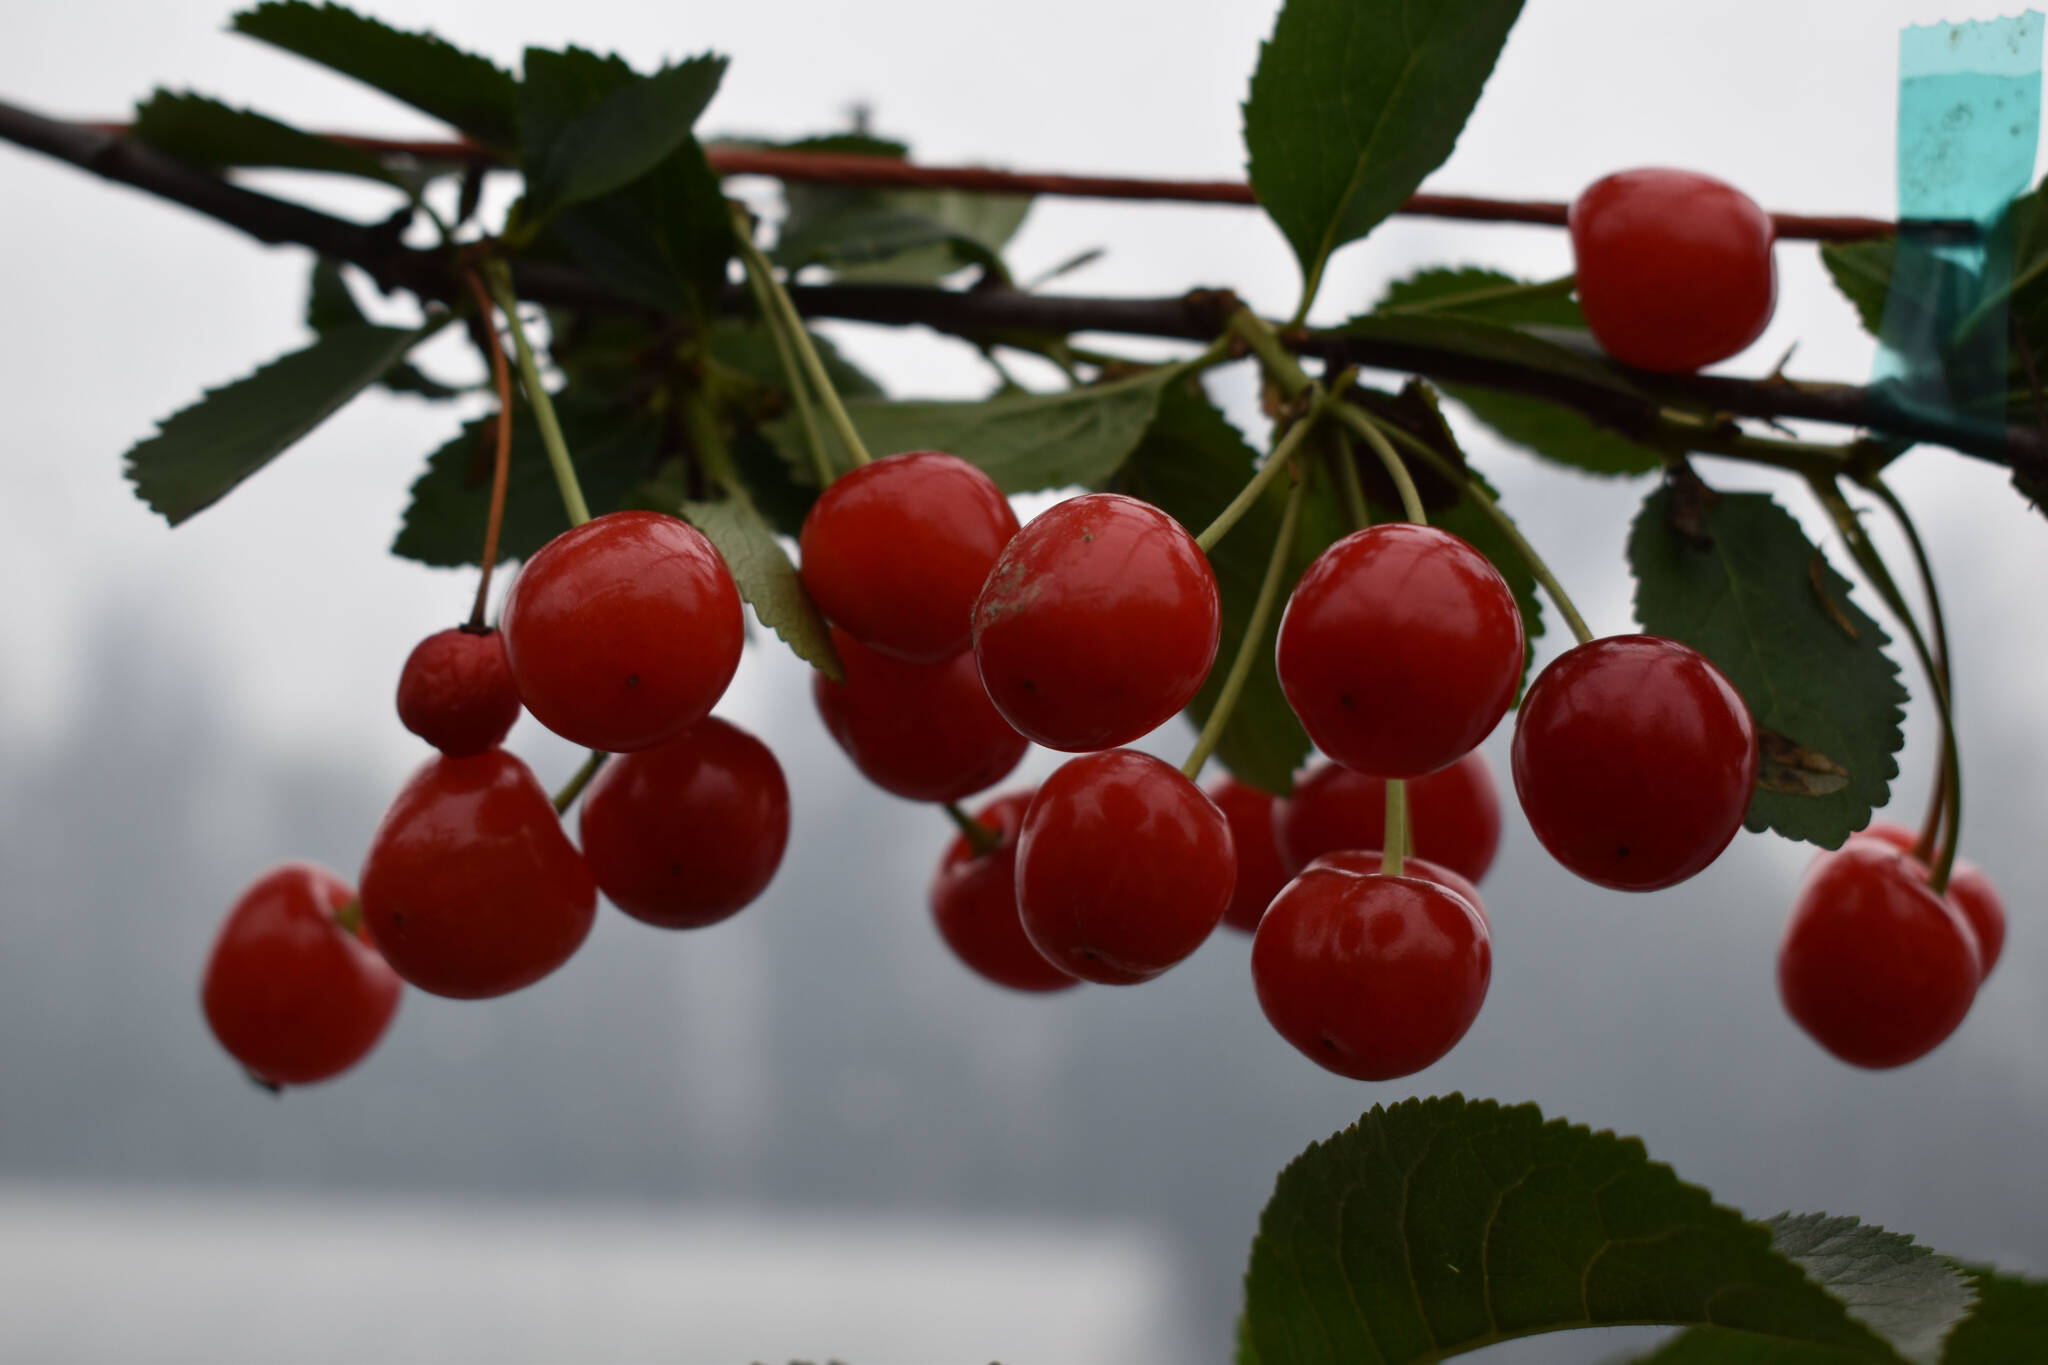 Cherries are ready to be picked at O’Brien Garden & Trees on Wednesday, Aug. 31, 2022, in Nikiski, Alaska. (Jake Dye/Peninsula Clarion)